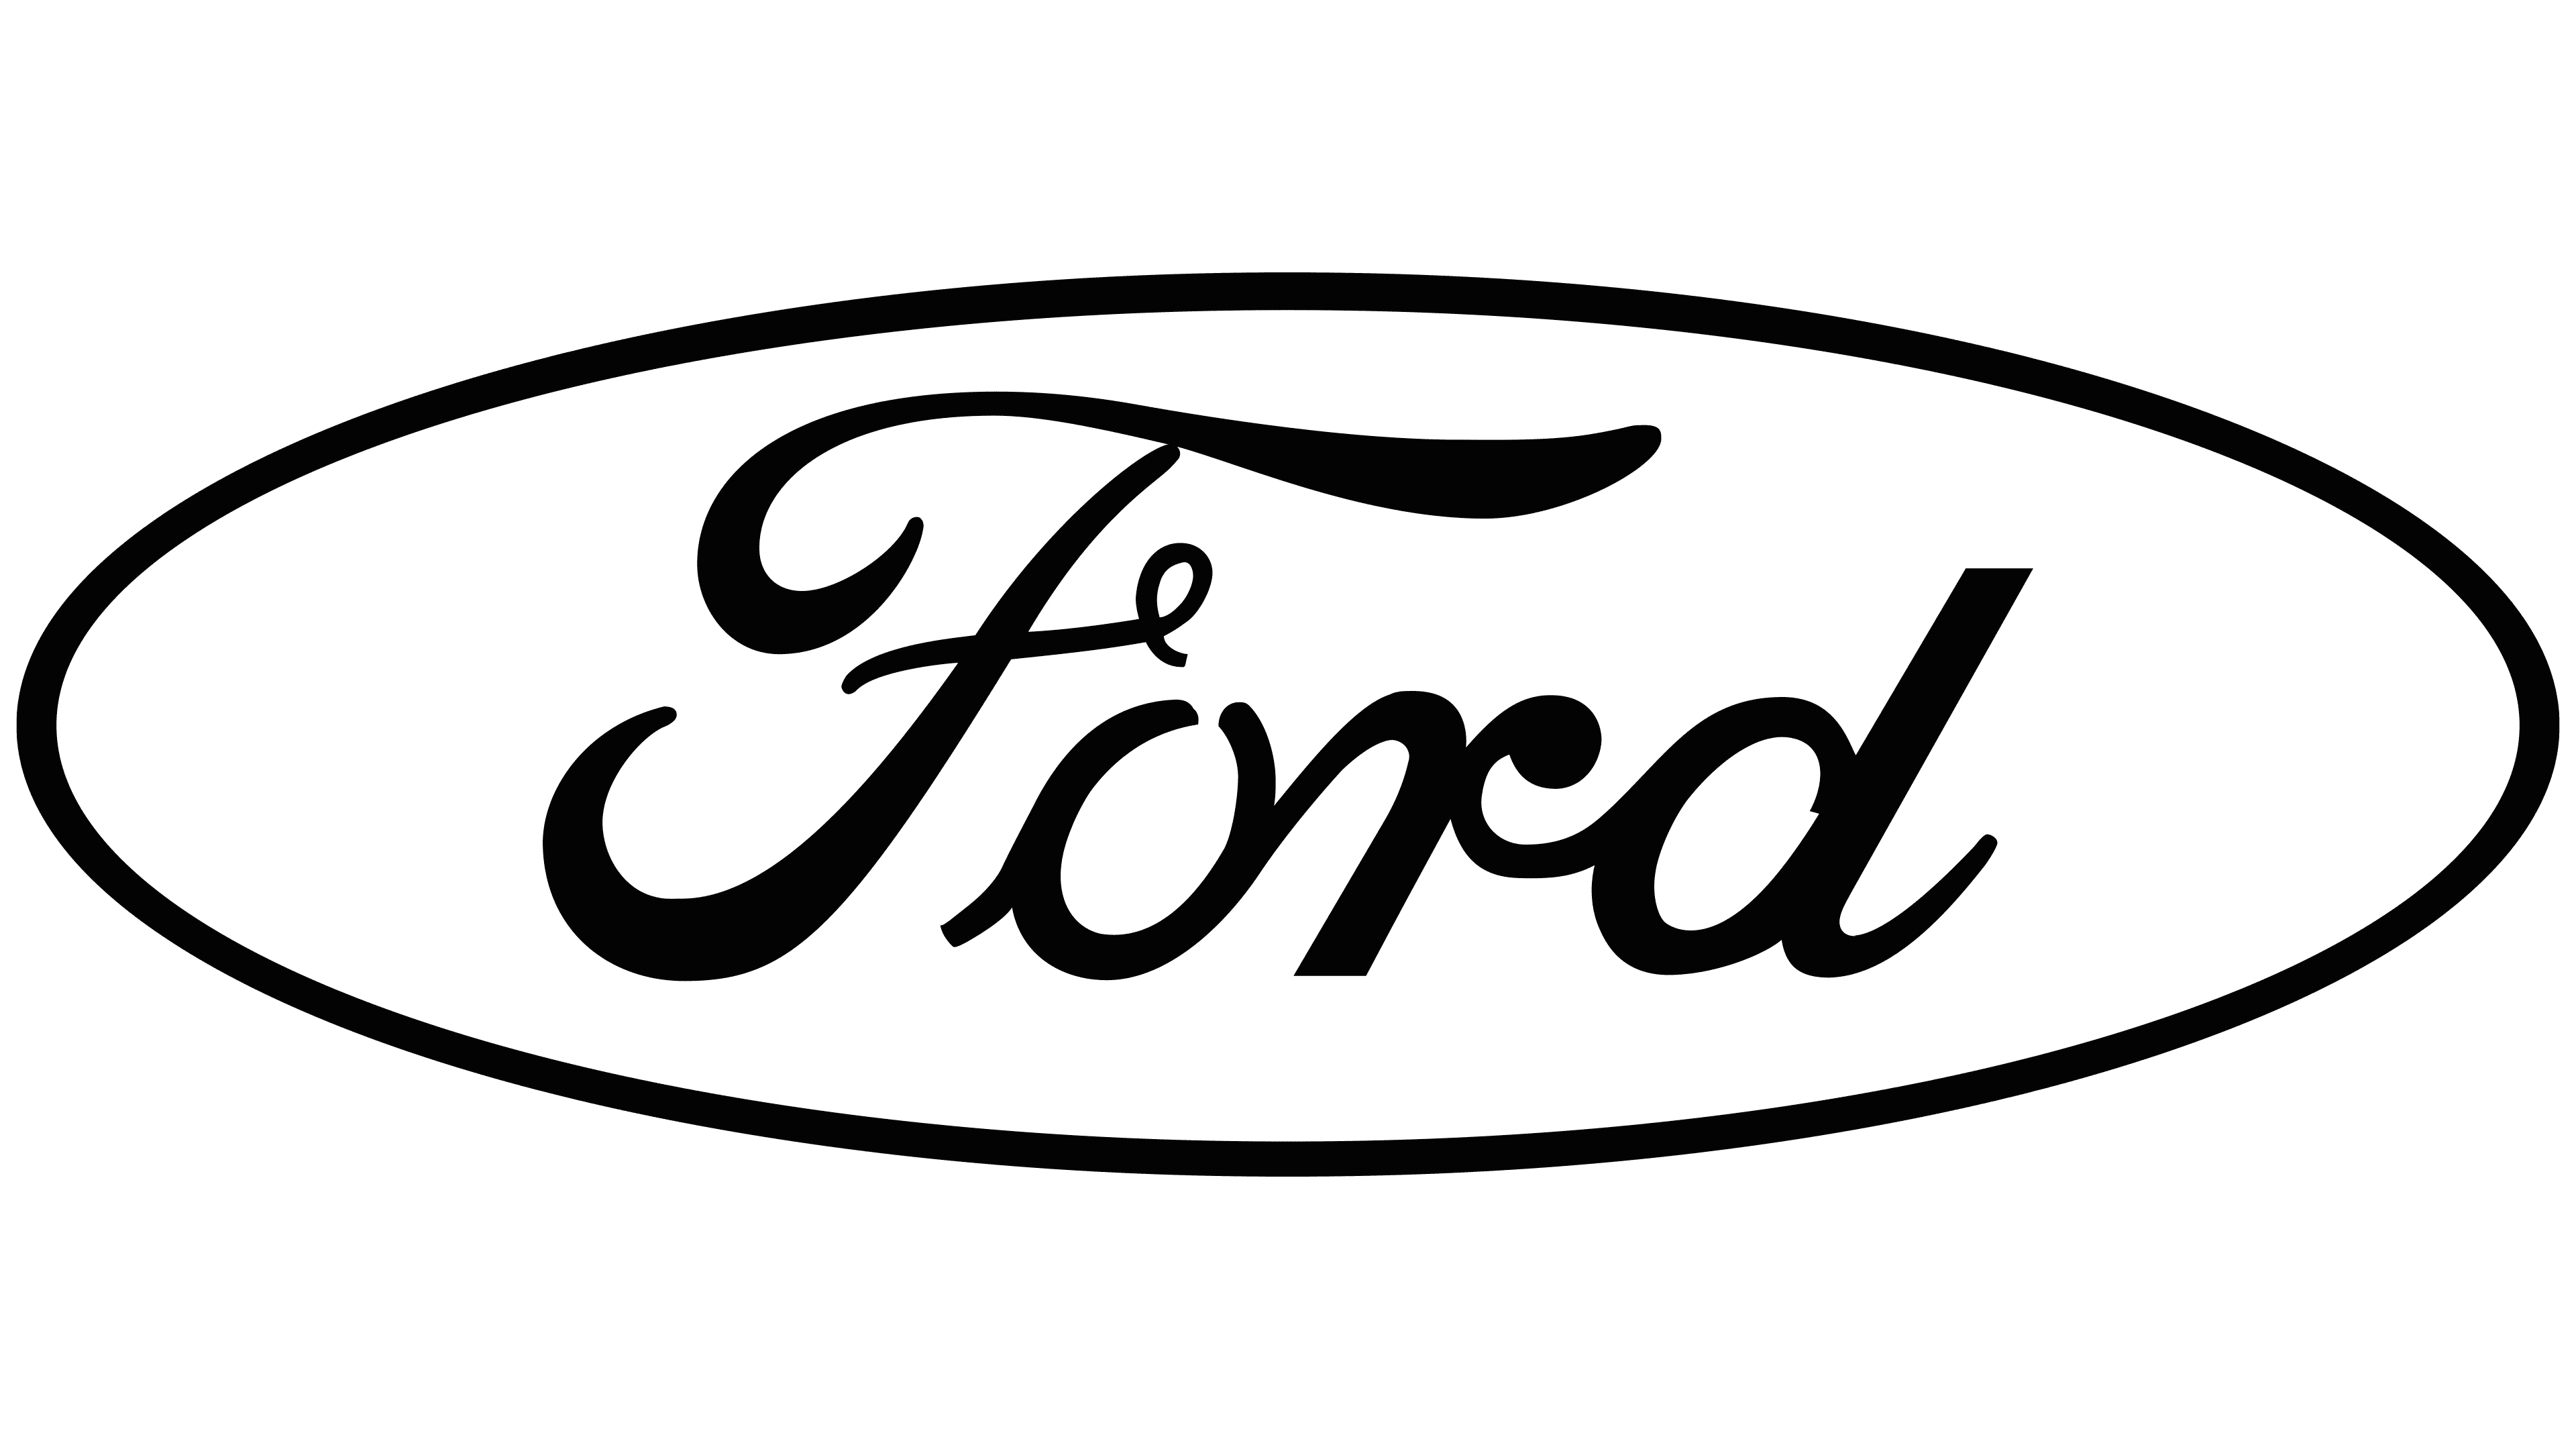 https://logos-world.net/wp-content/uploads/2021/03/Ford-Emblem.png